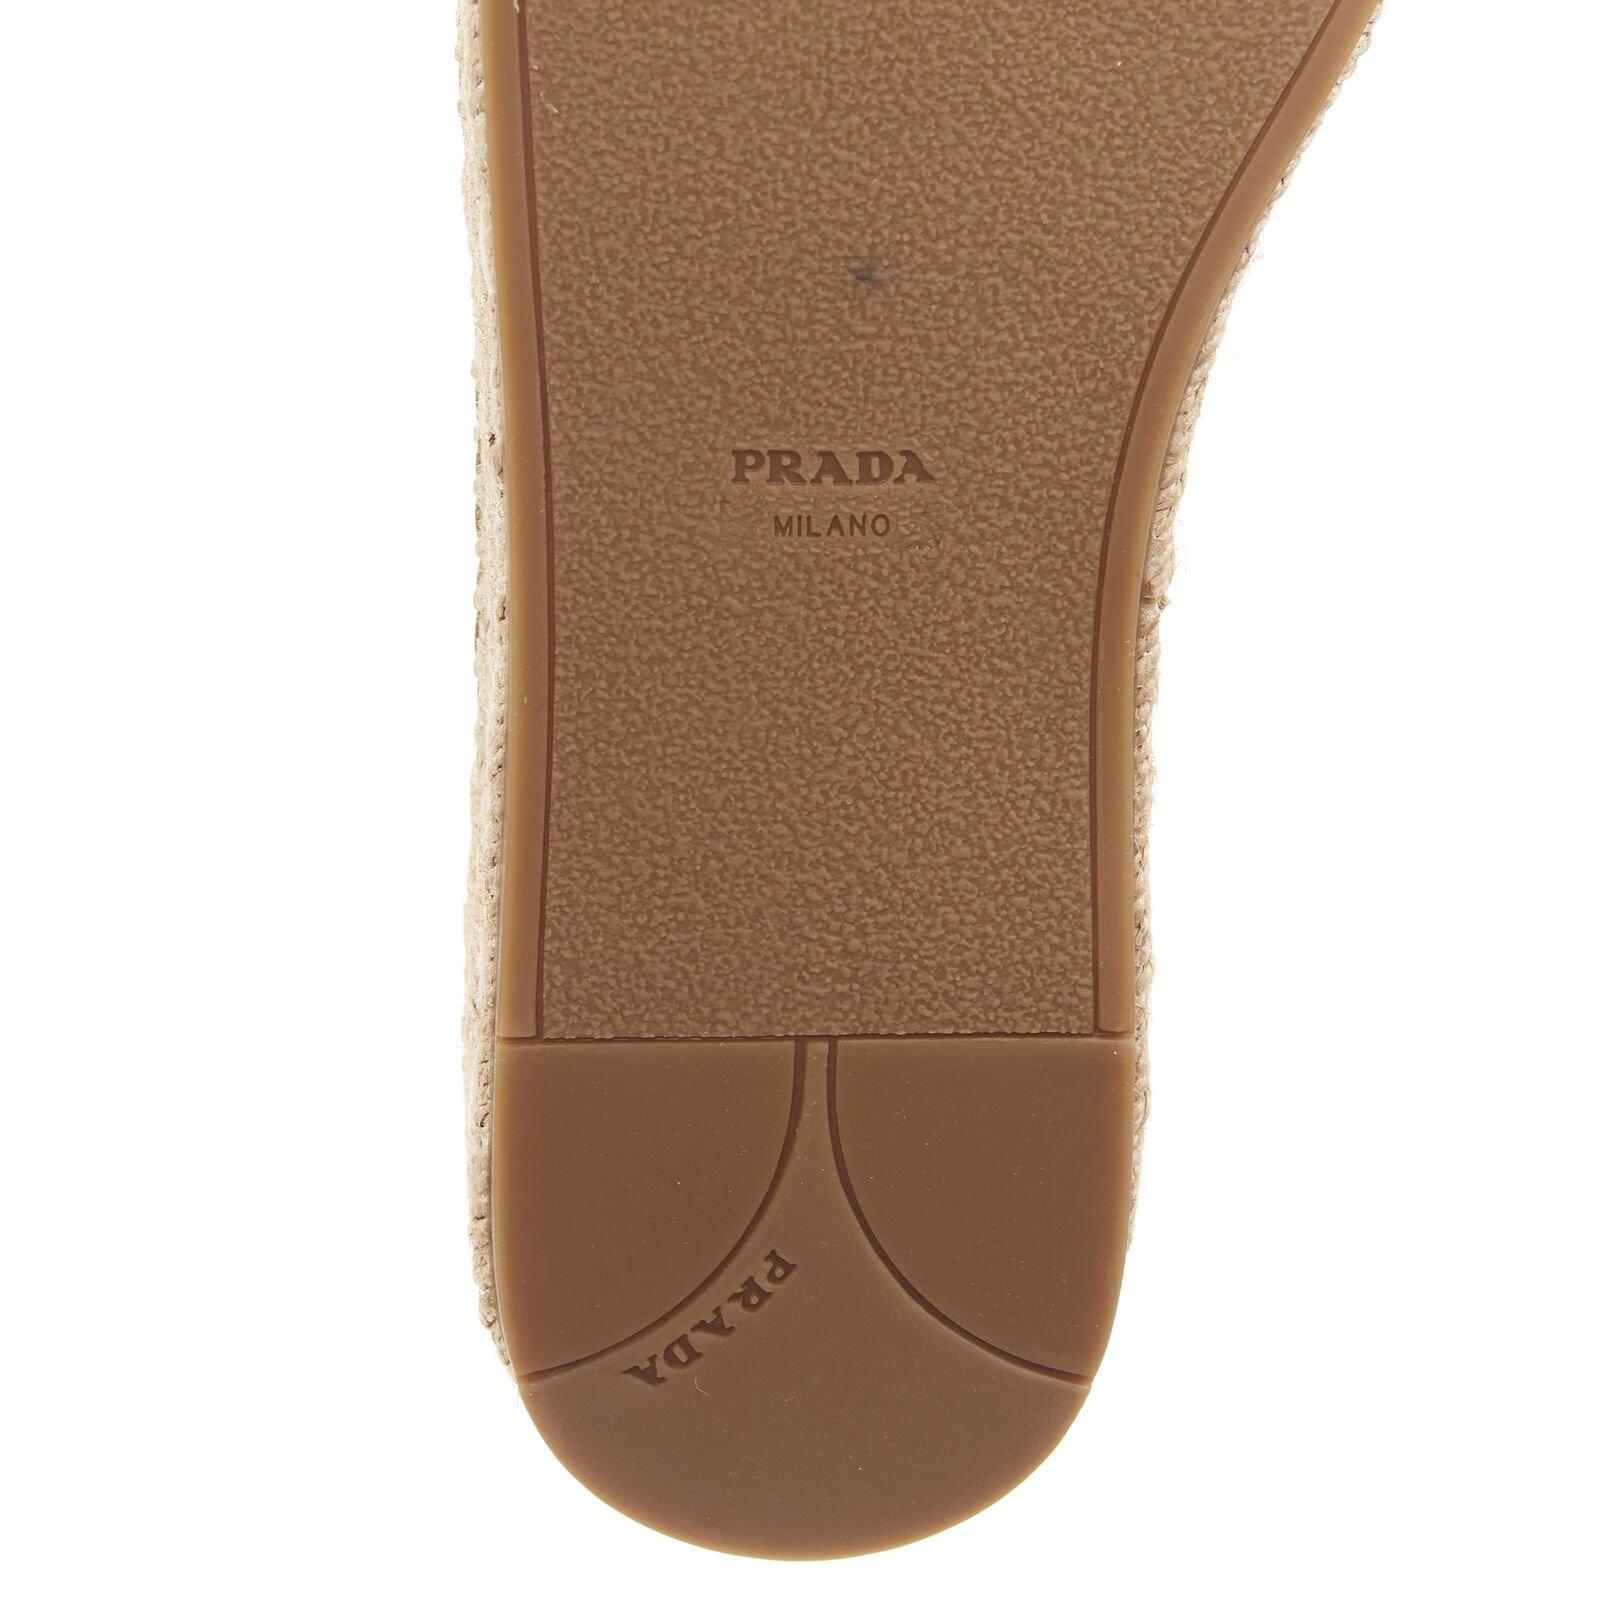 new PRADA metallic gold leather logo peep toe jute platform espadrille shoe EU38 6